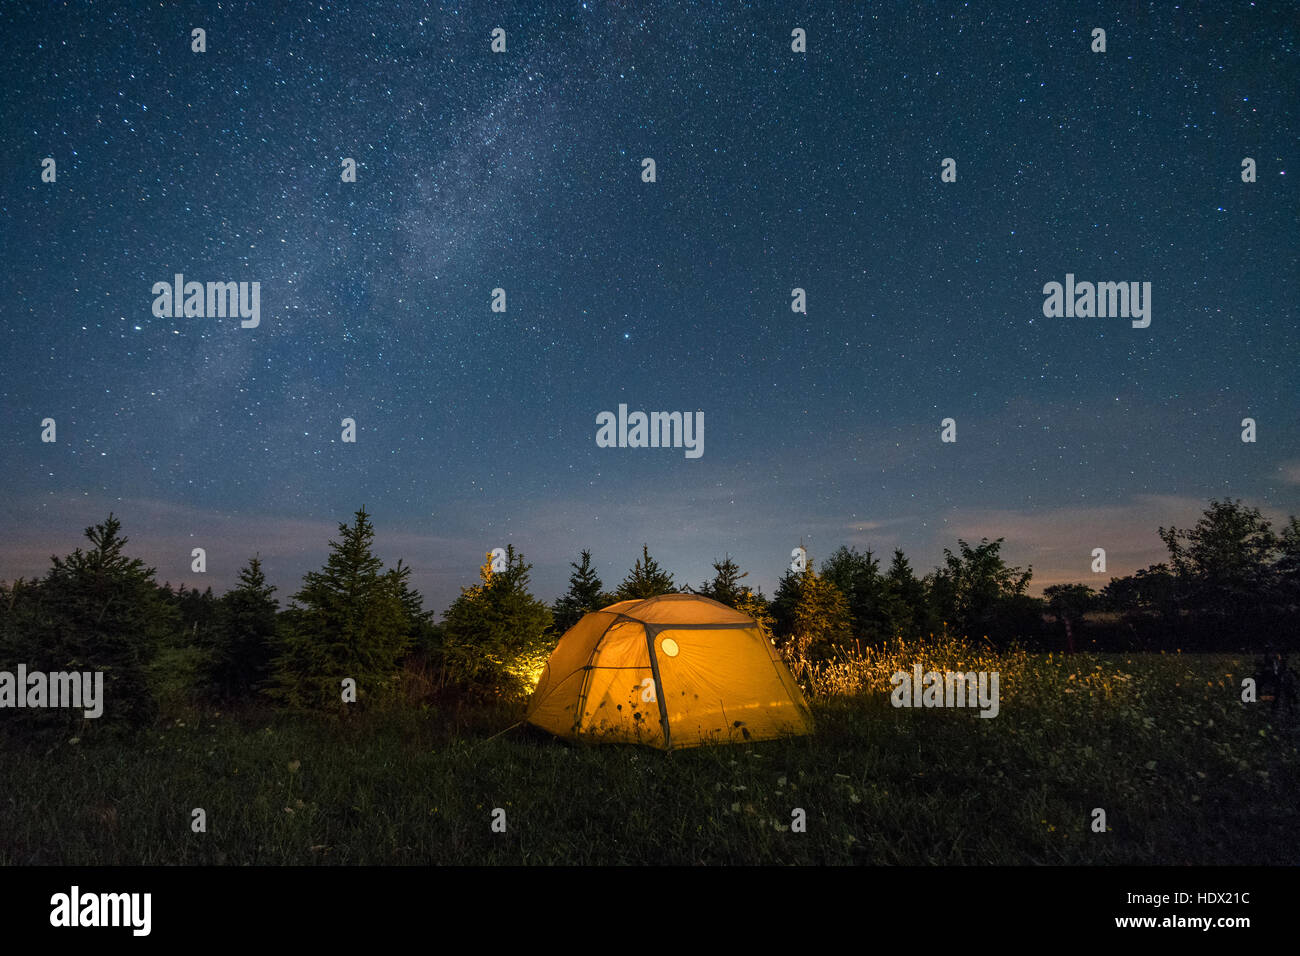 Illuminated camping tent under starry sky Stock Photo